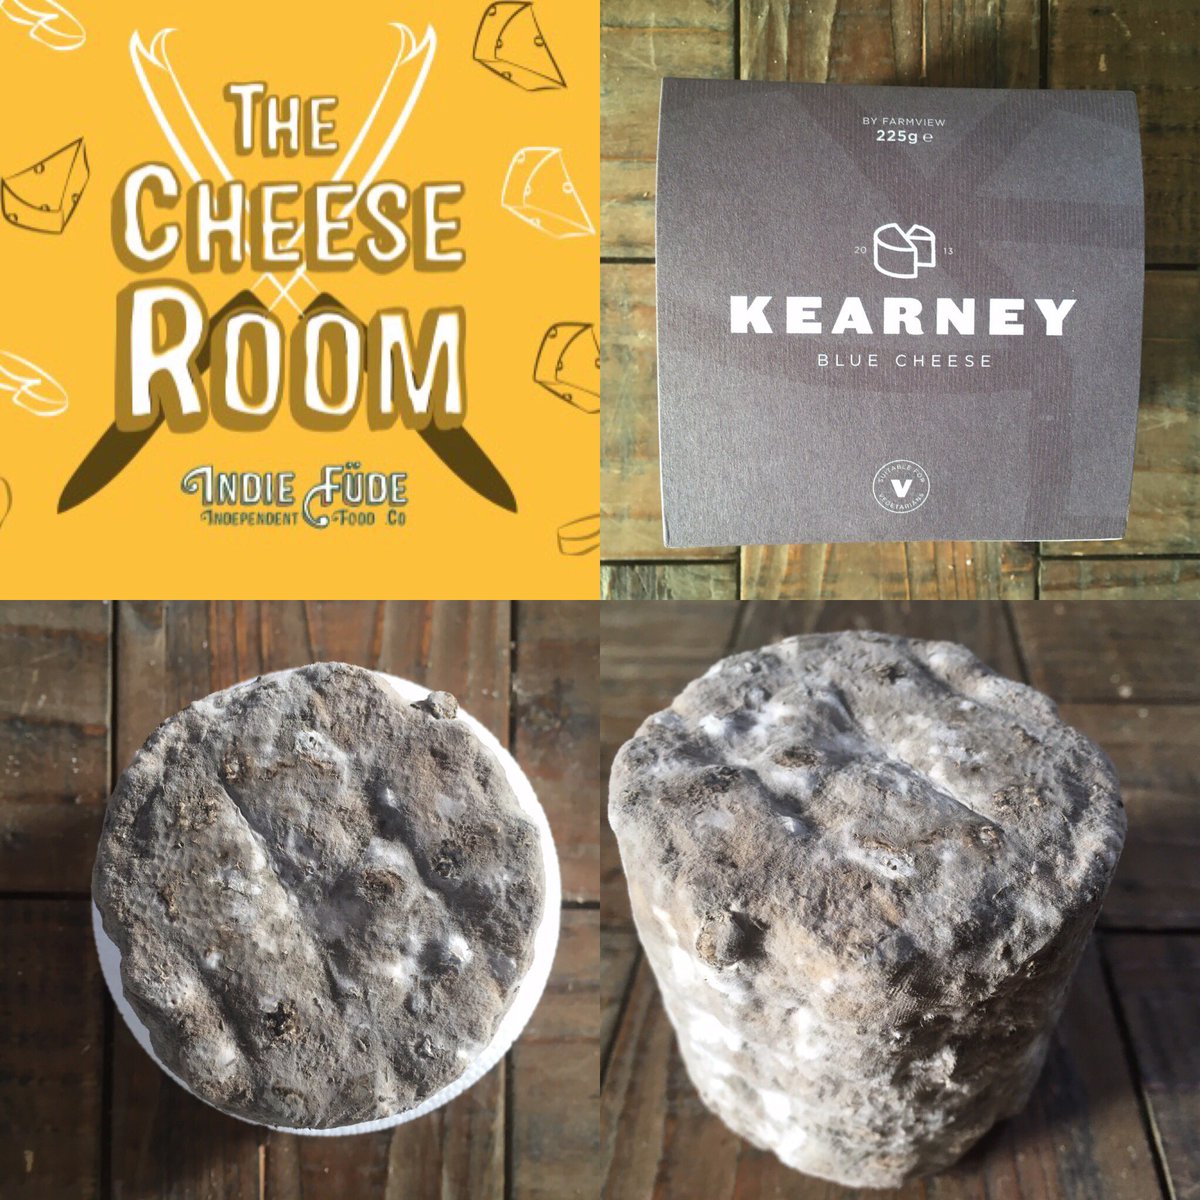 The Cheese Room #cheeseoftheweek 🧀 is @kearneycheeseco #blue by Paul McClean. Taste is creamy, fresh, little salty w/ a subtle blue finish 😚